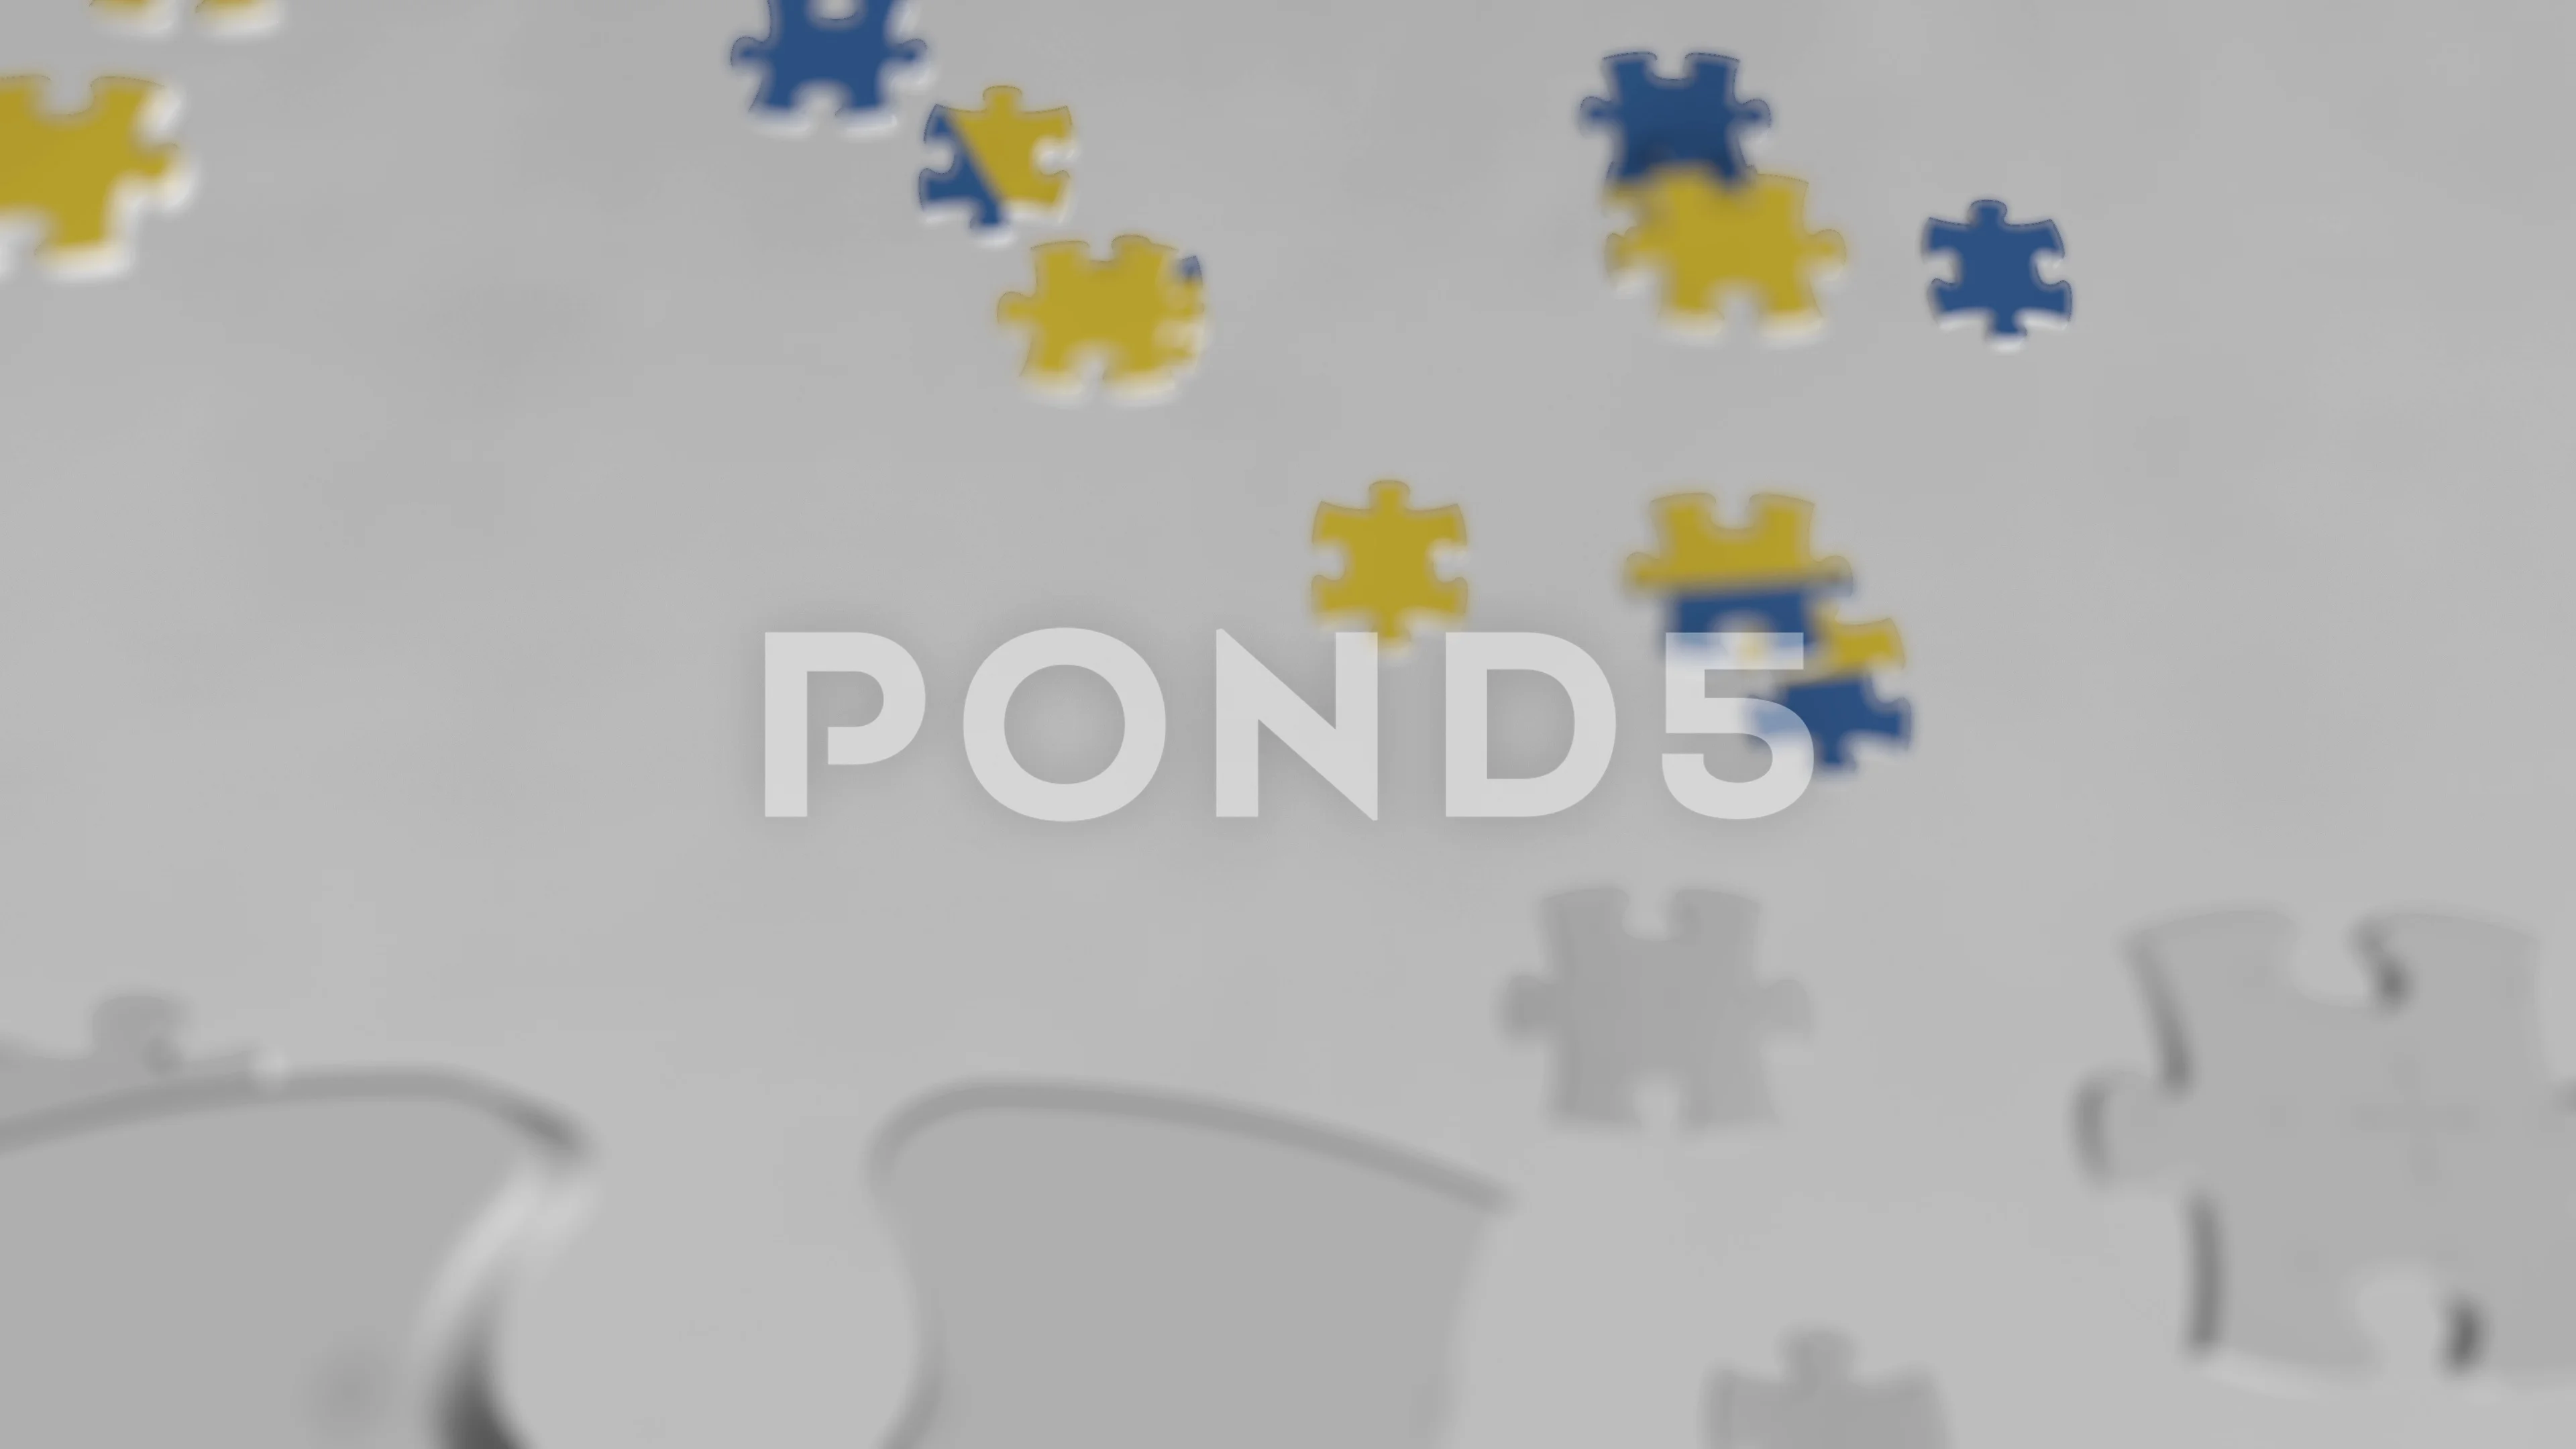 LOUIS VUITTON Logo Composing with Puzzle Pieces, Editorial 3D